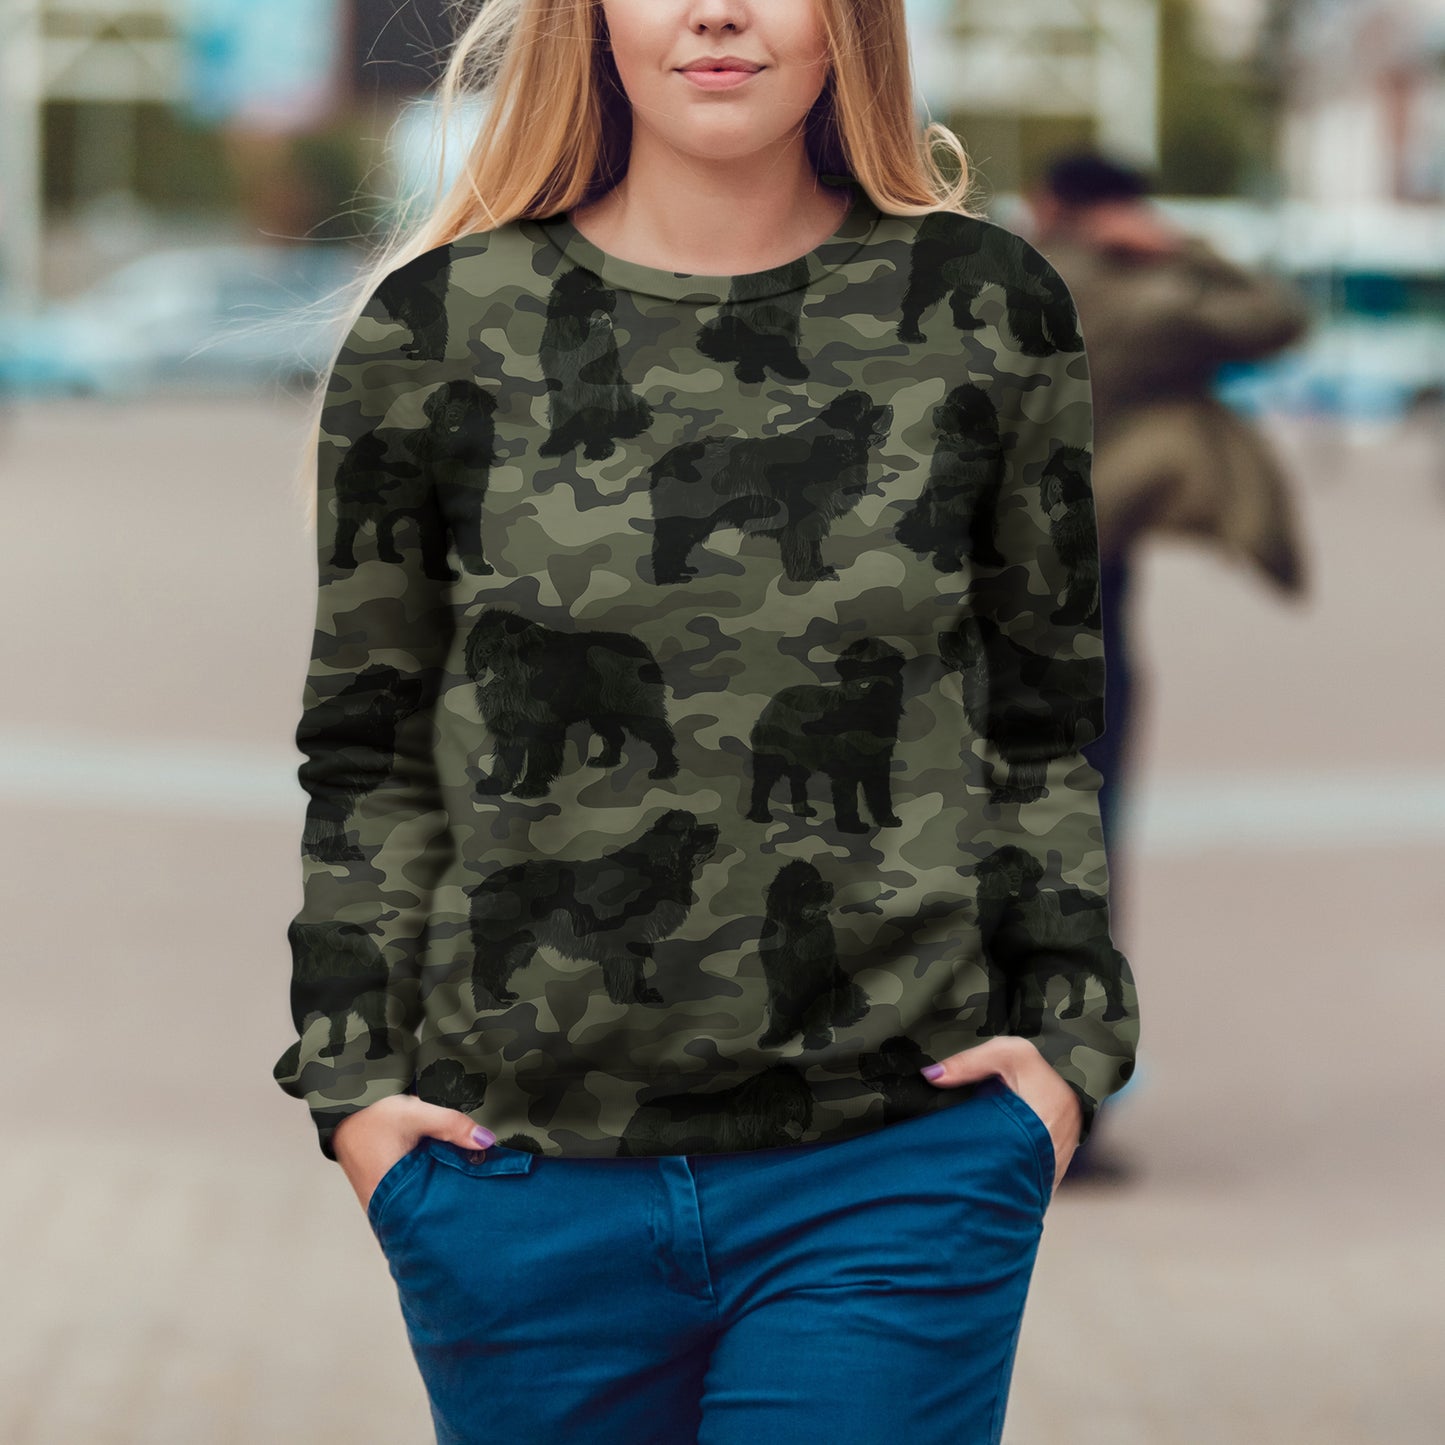 Street Style With Newfoundland Camo Sweatshirt V1